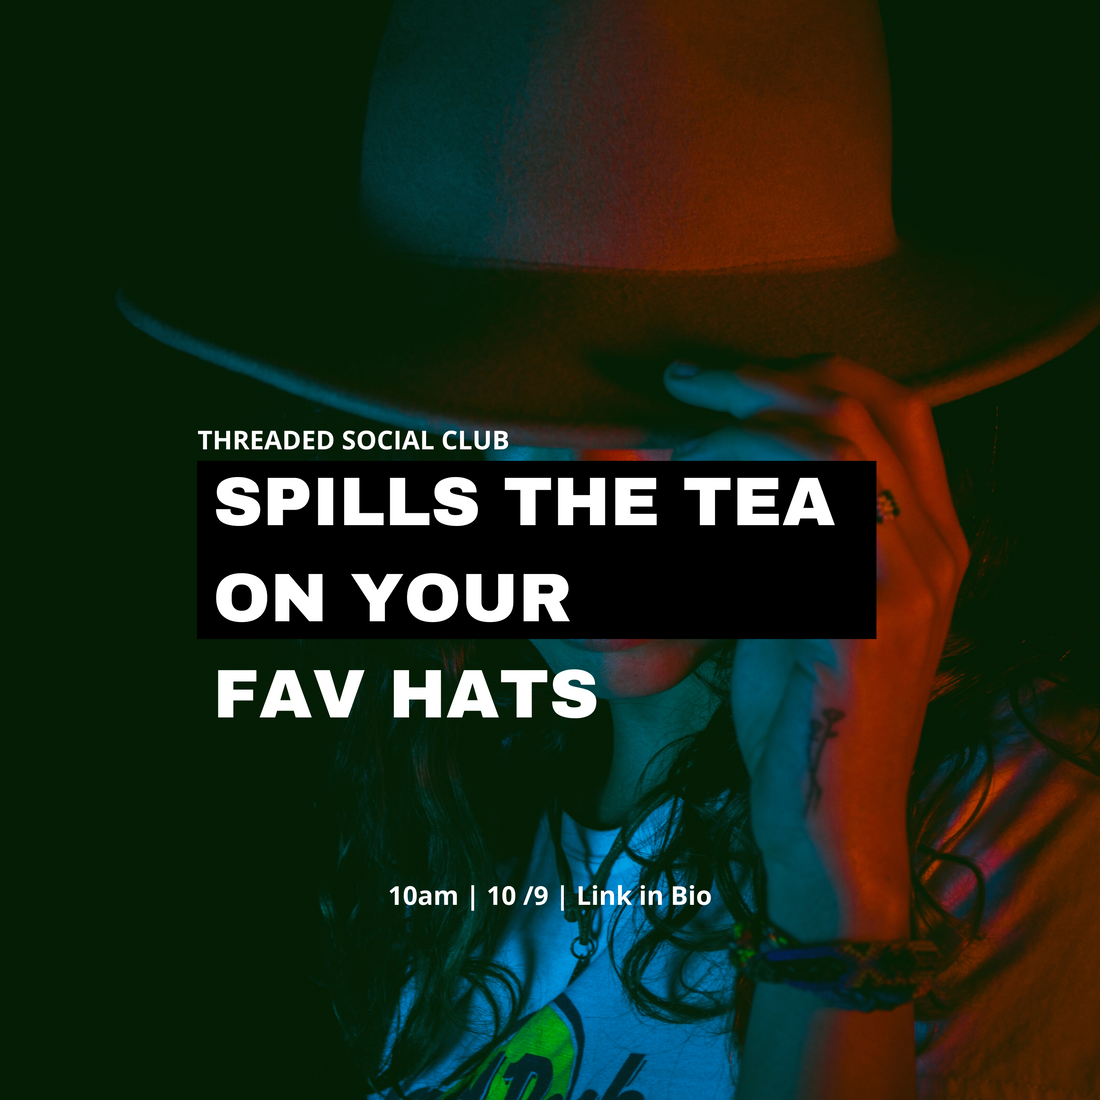 Threaded Social Club Spills the Tea About Hats